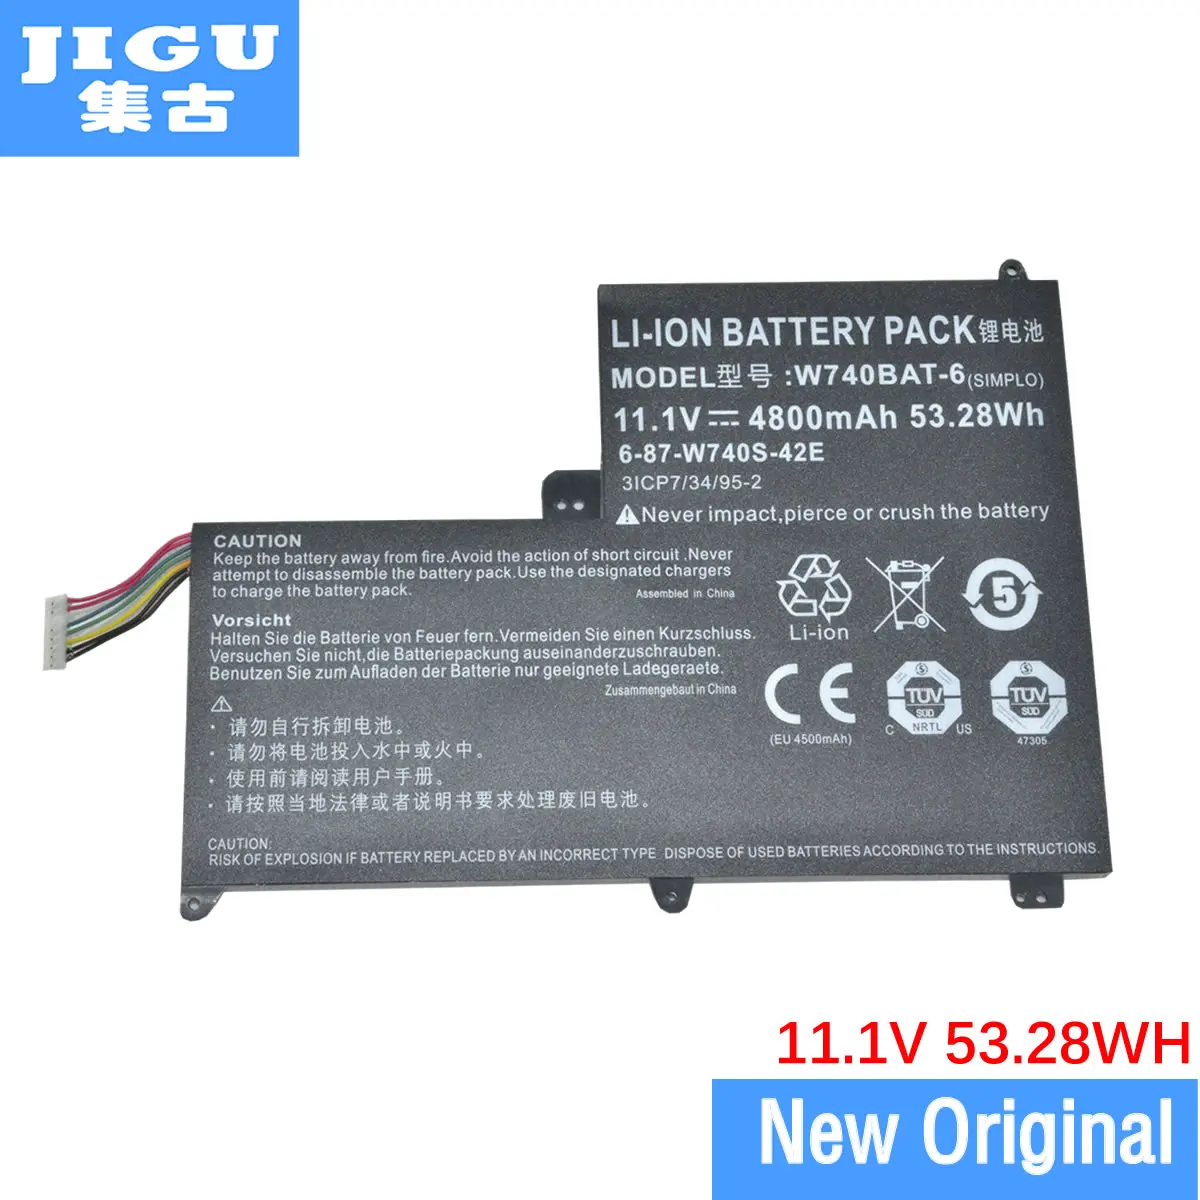 

JIGU Original Laptop Battery For Clevo 6-87-W740S-42E1 3ICP7/34/95-2 W740BAT-6 S413 W740SU Series 11.1V 53.28WH